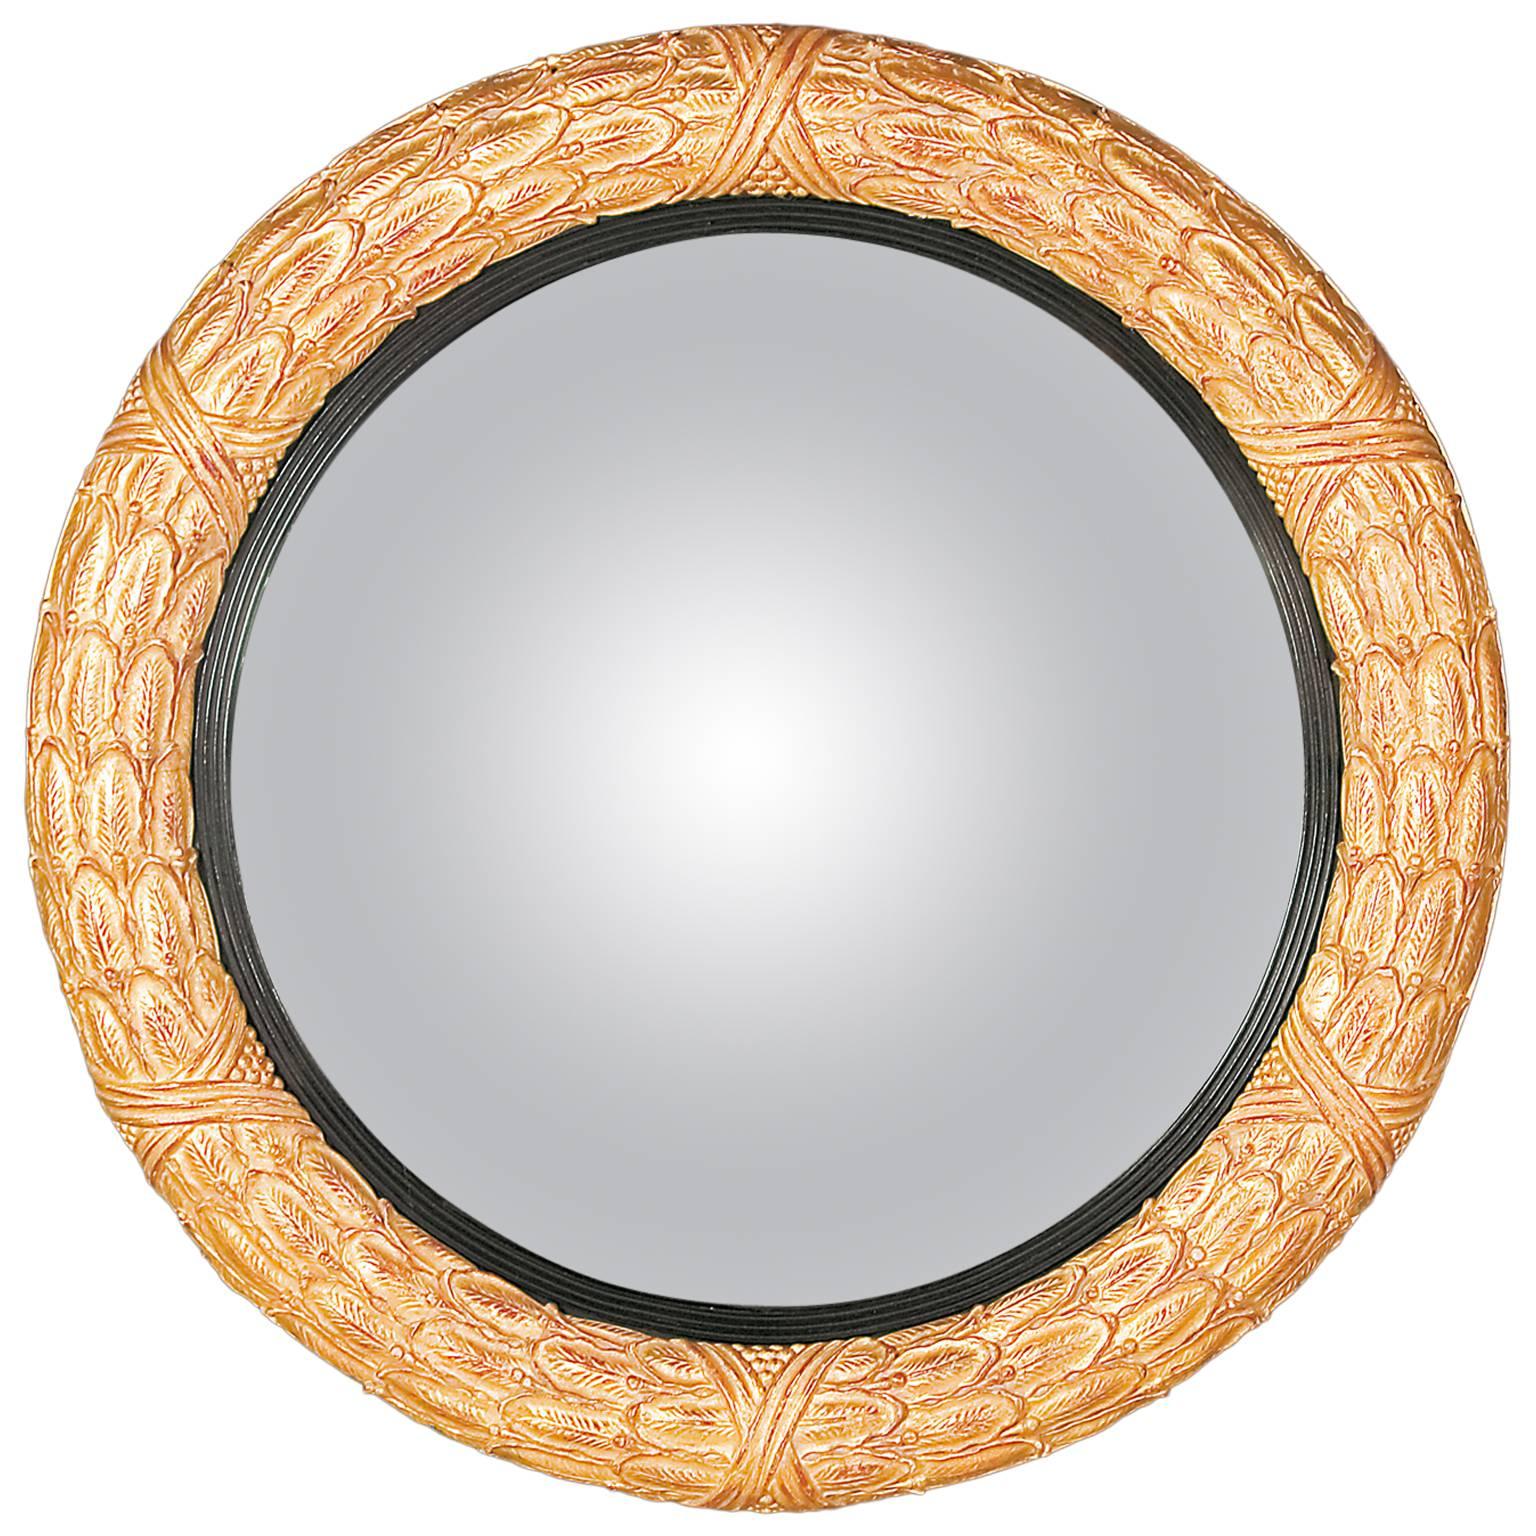 The Laurel Convex Mirror in der Regency-Manier